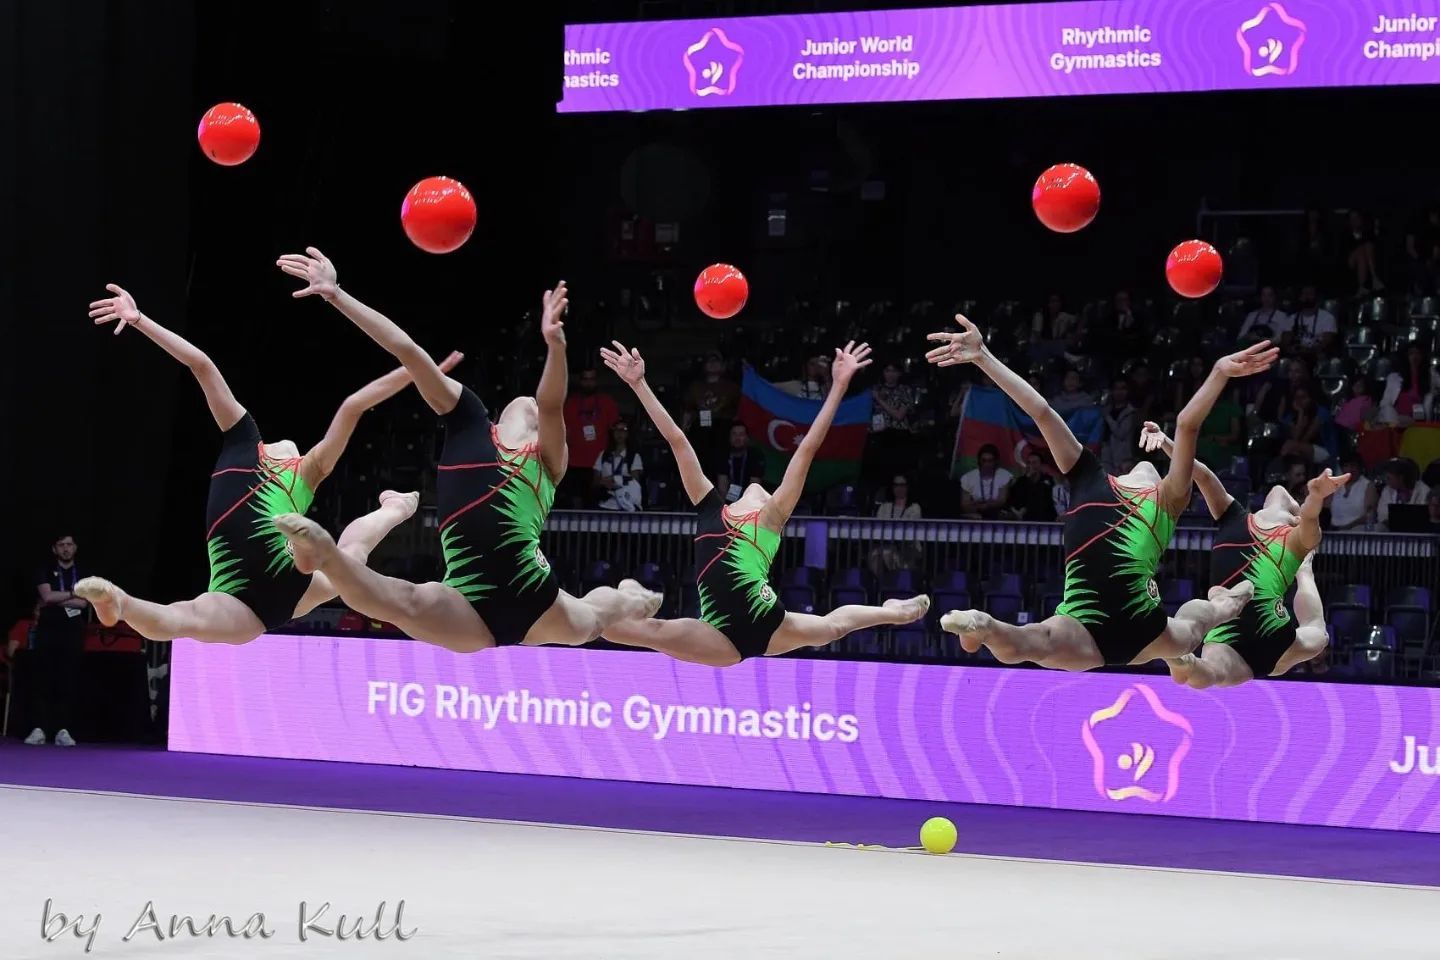 National team claim medals at Rhythmic Gymnastics World Junior Championship [PHOTOS]